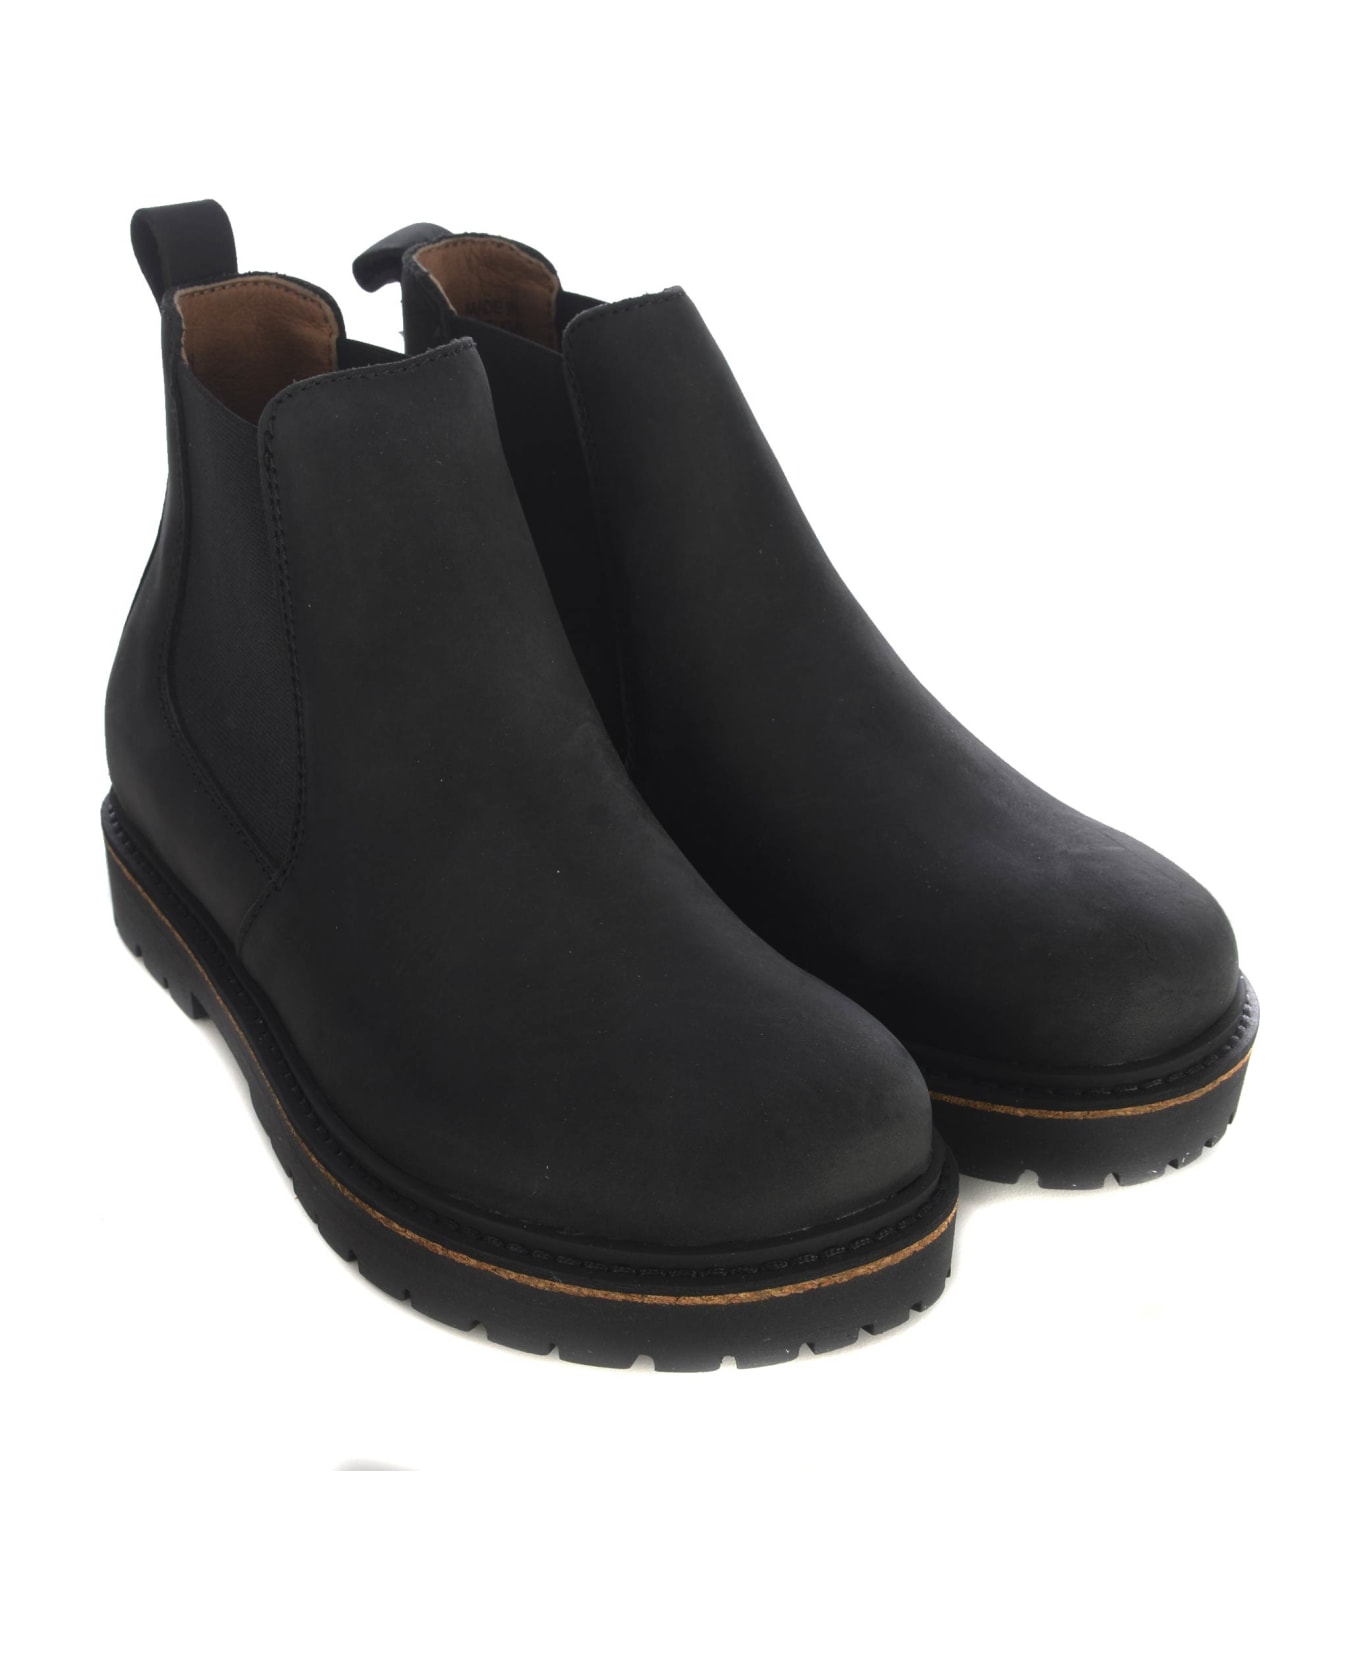 Birkenstock Boots Birkenstock "stalon" In Leather - Nero